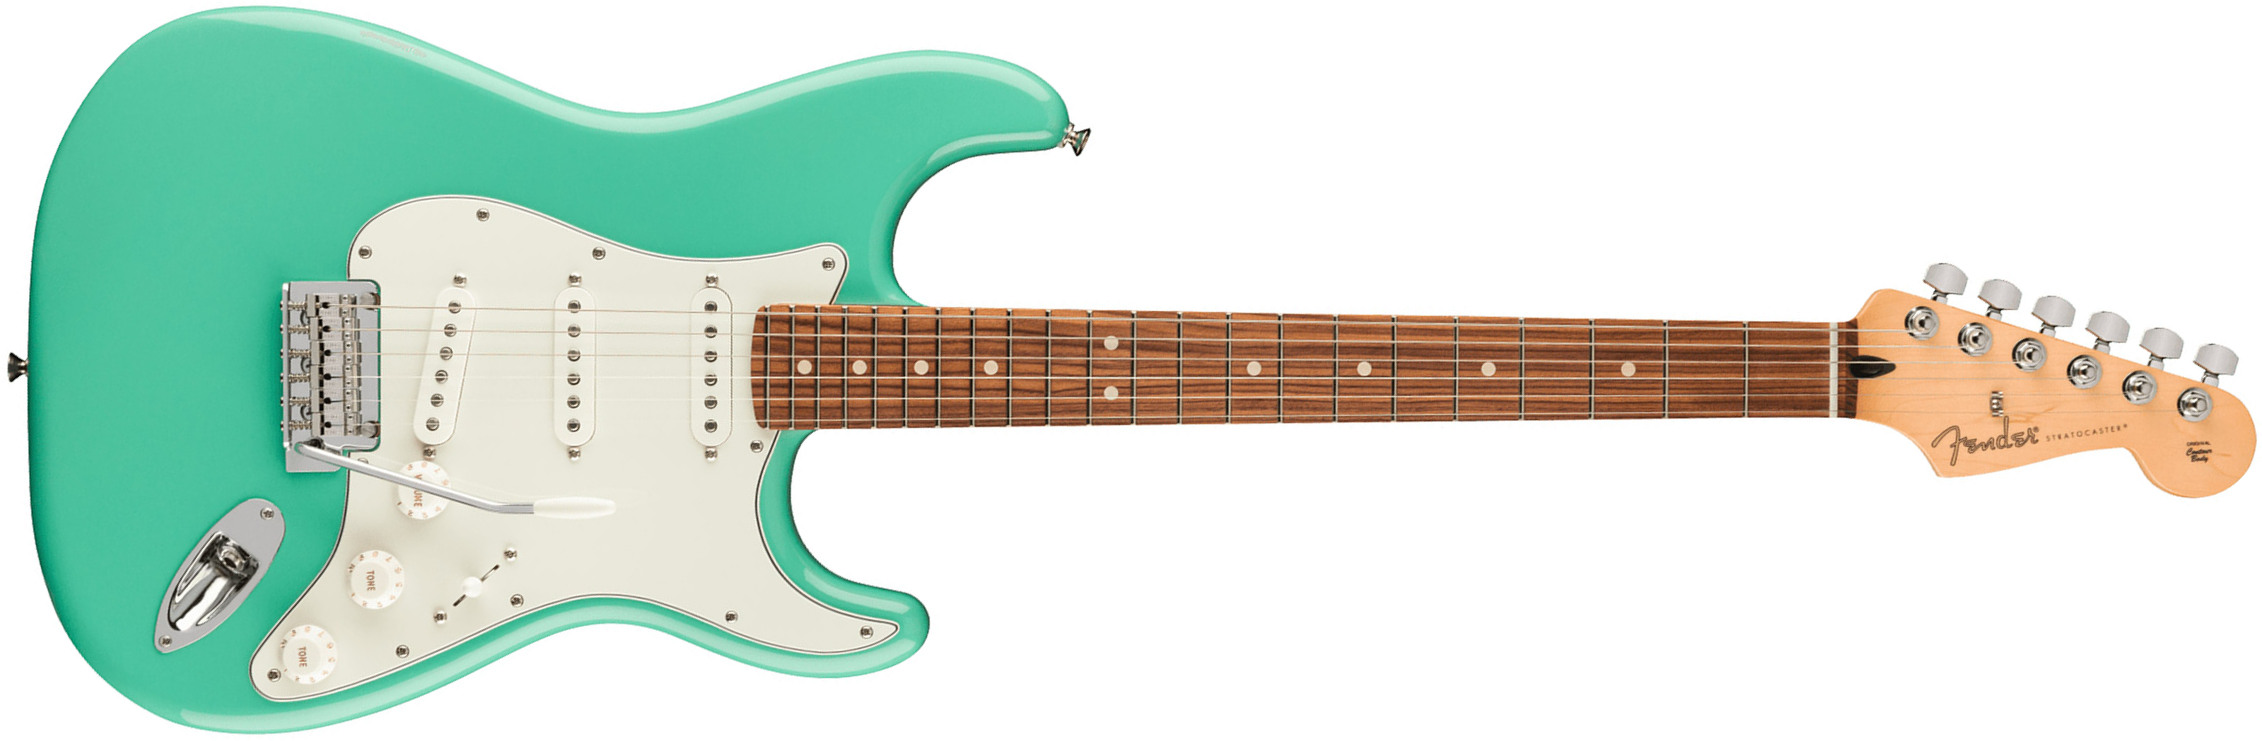 Fender Strat Player Mex 2023 3s Trem Pf - Seafoam Green - Str shape electric guitar - Main picture